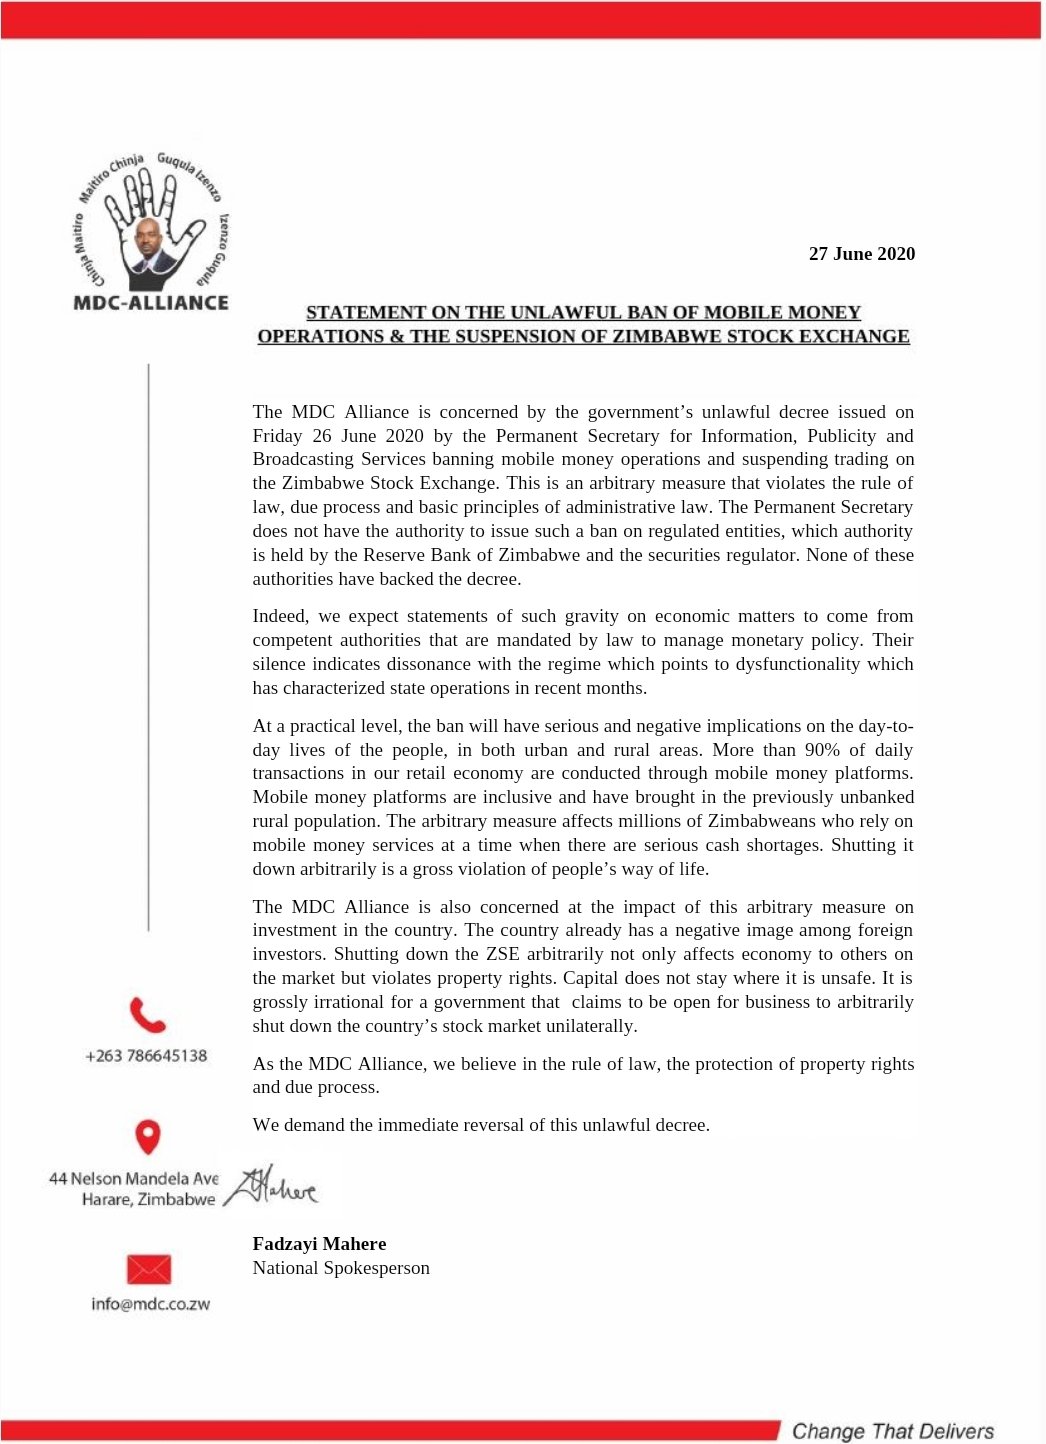 MDC Alliance Speaks On 'Unlawful' Ban of Mobile Money